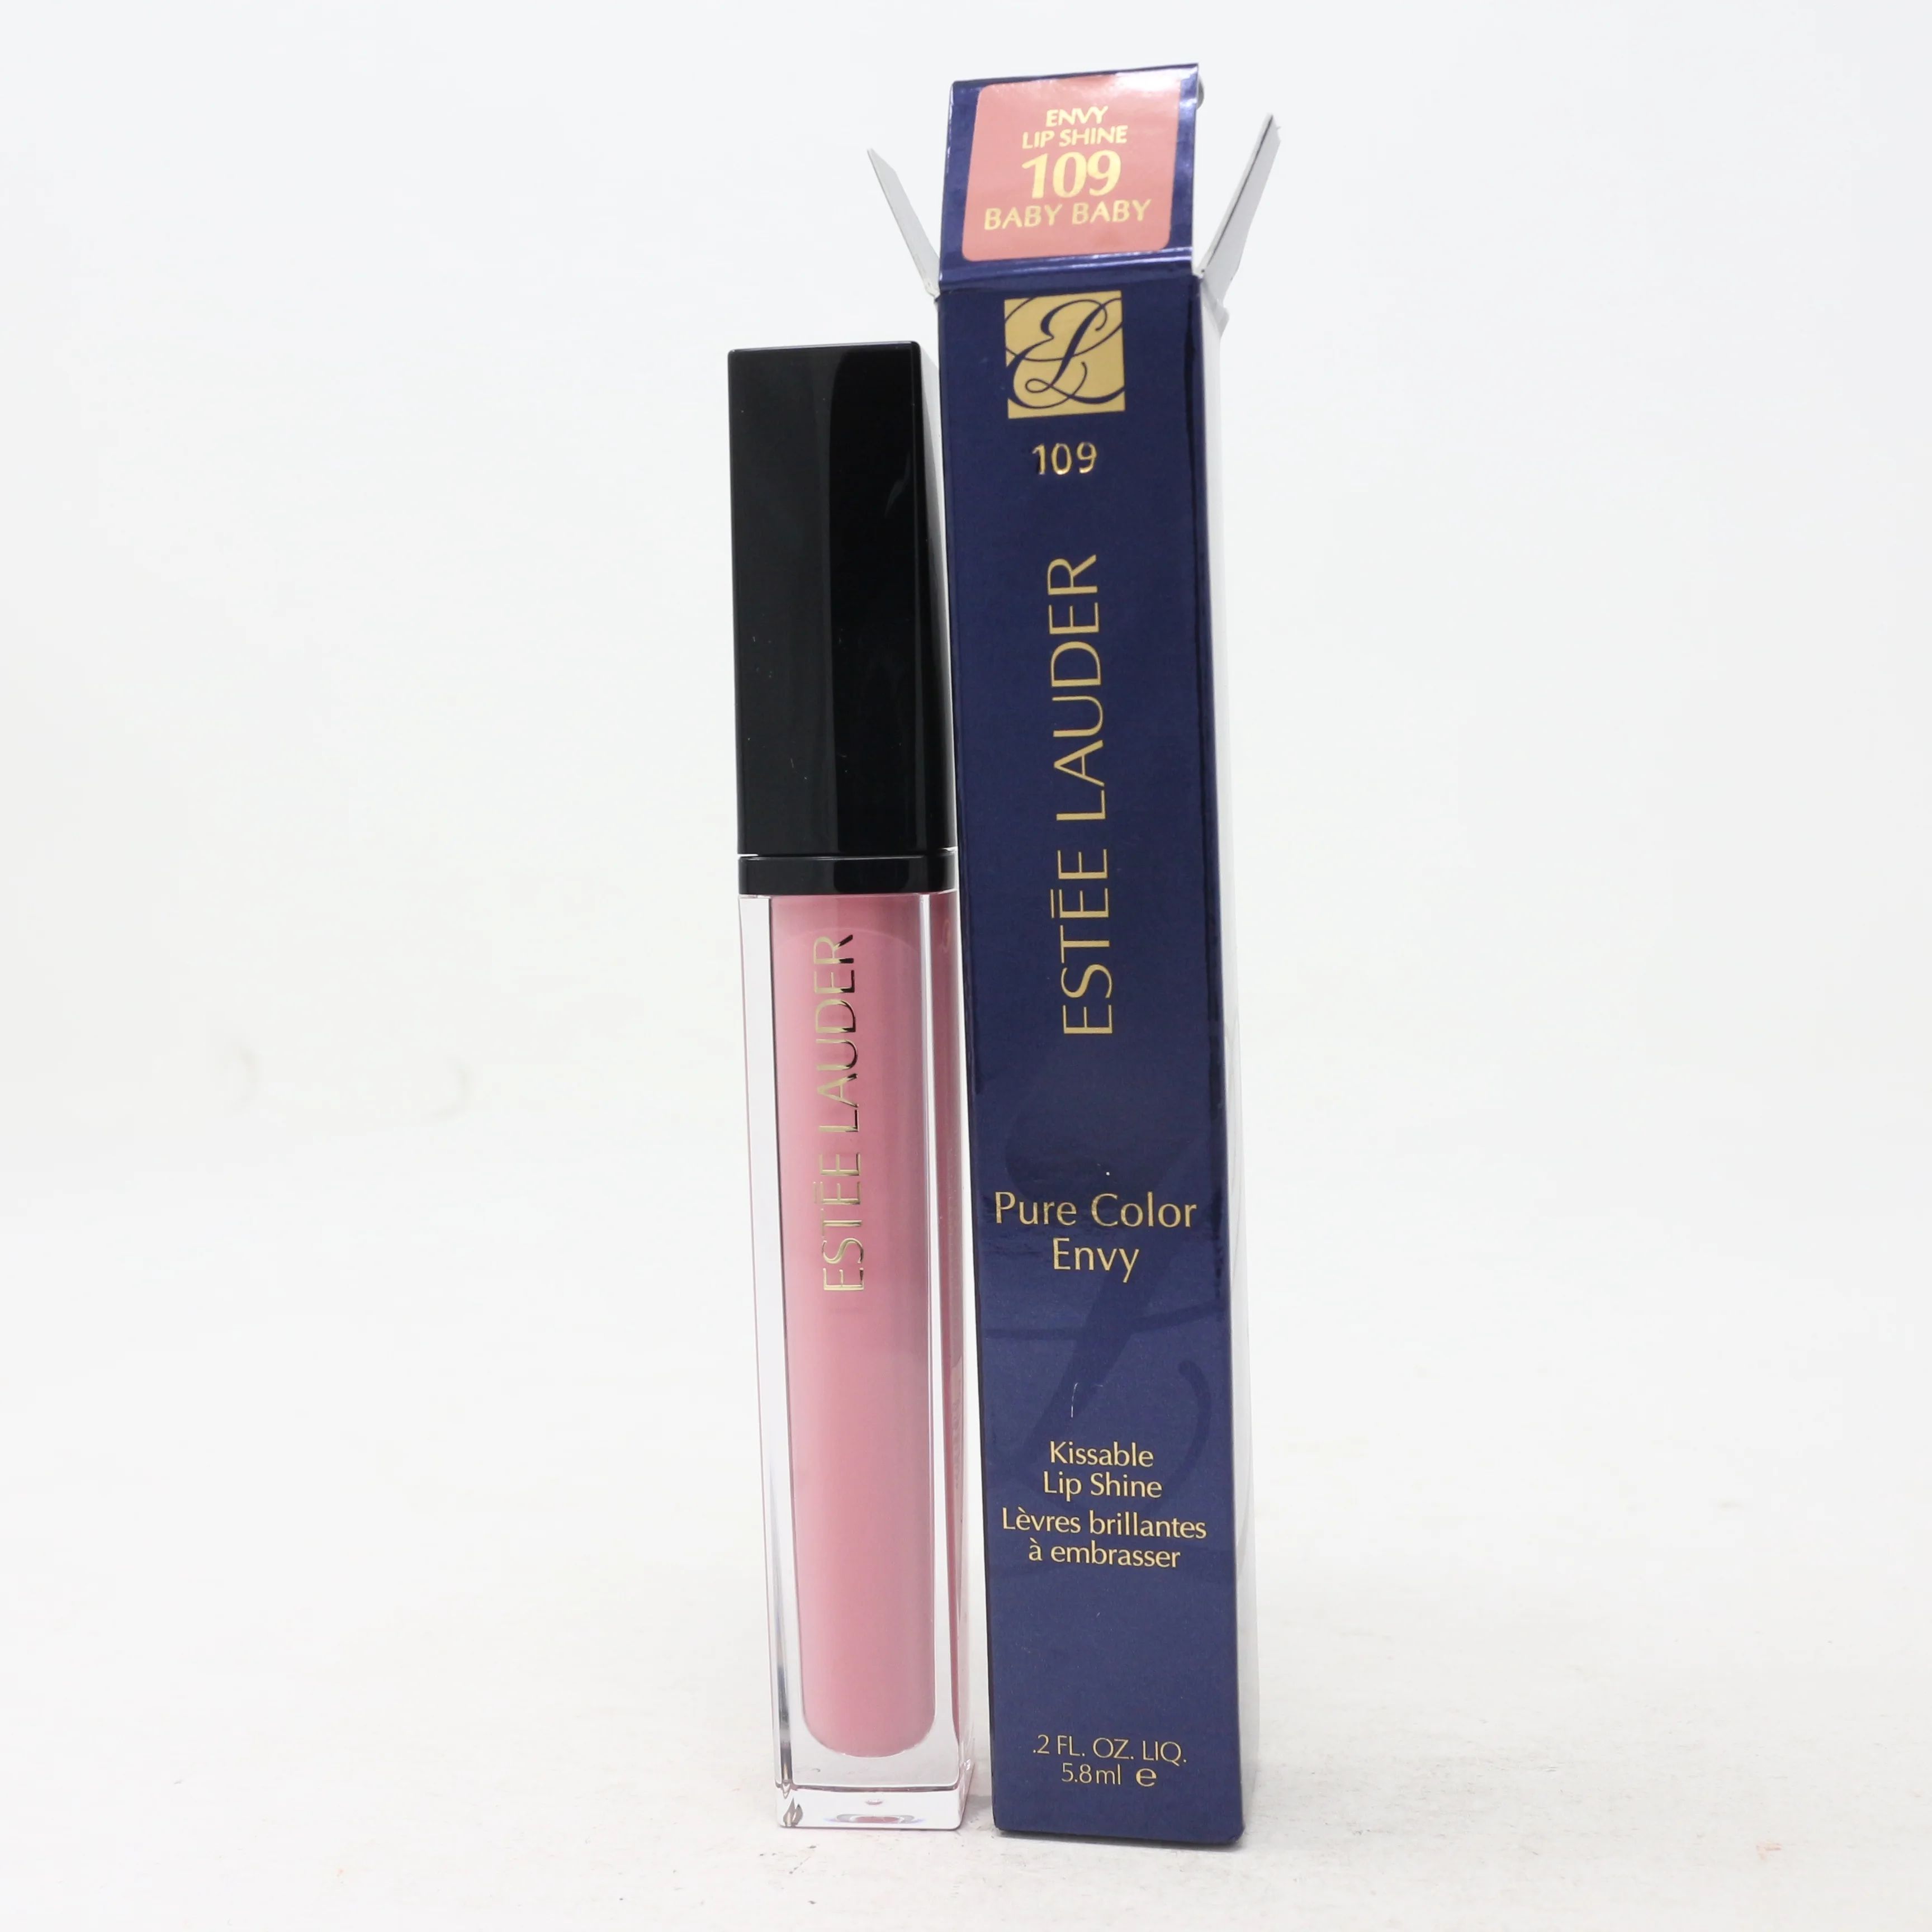 Estee Lauder Pure Color Envy Kissable Lip Shine 0.2oz 109 Baby Baby New With Box | Walmart (US)